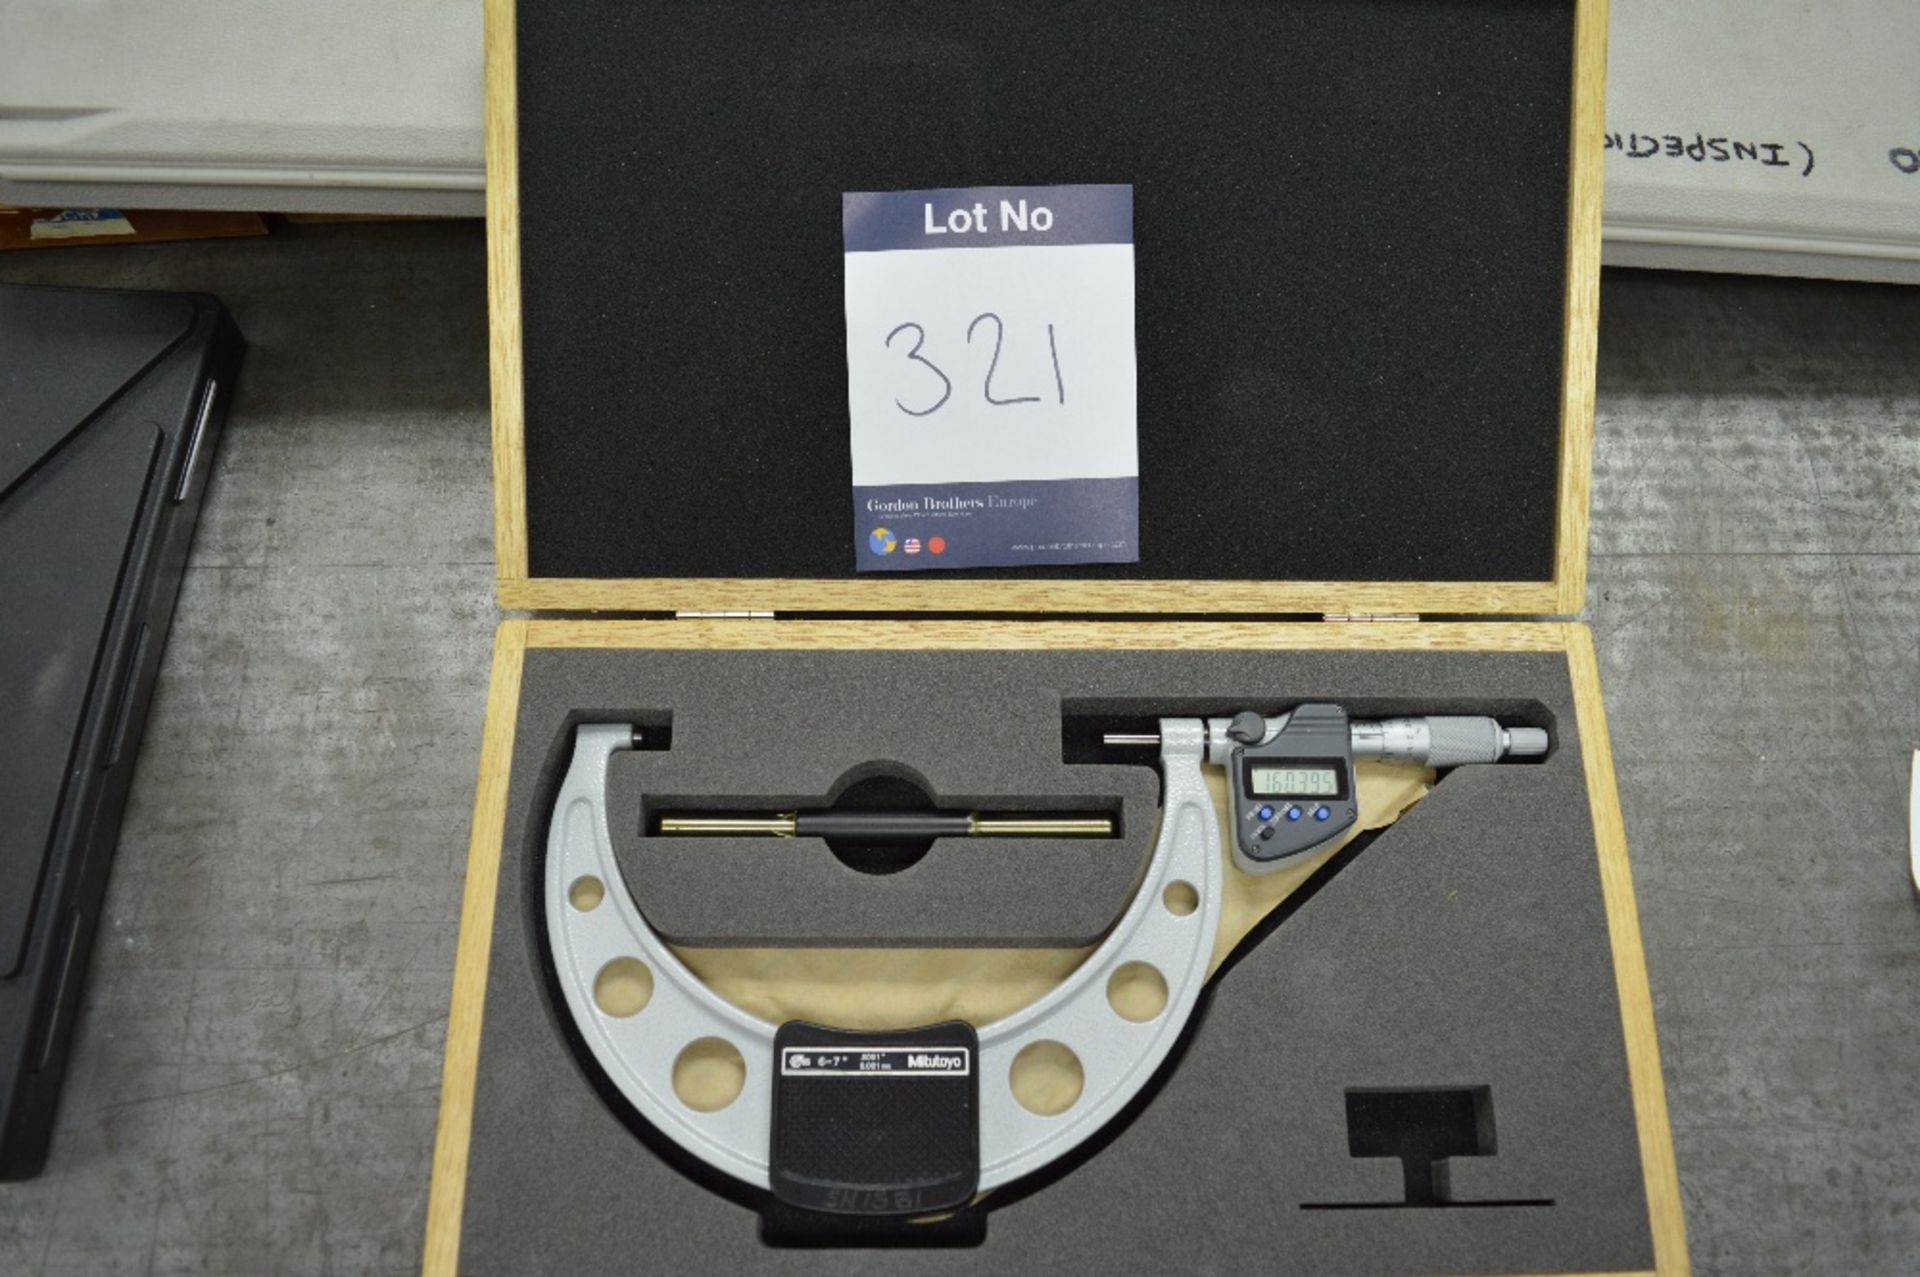 Mitutoyo 6-7" Digital Micrometer
Serial Number: 29